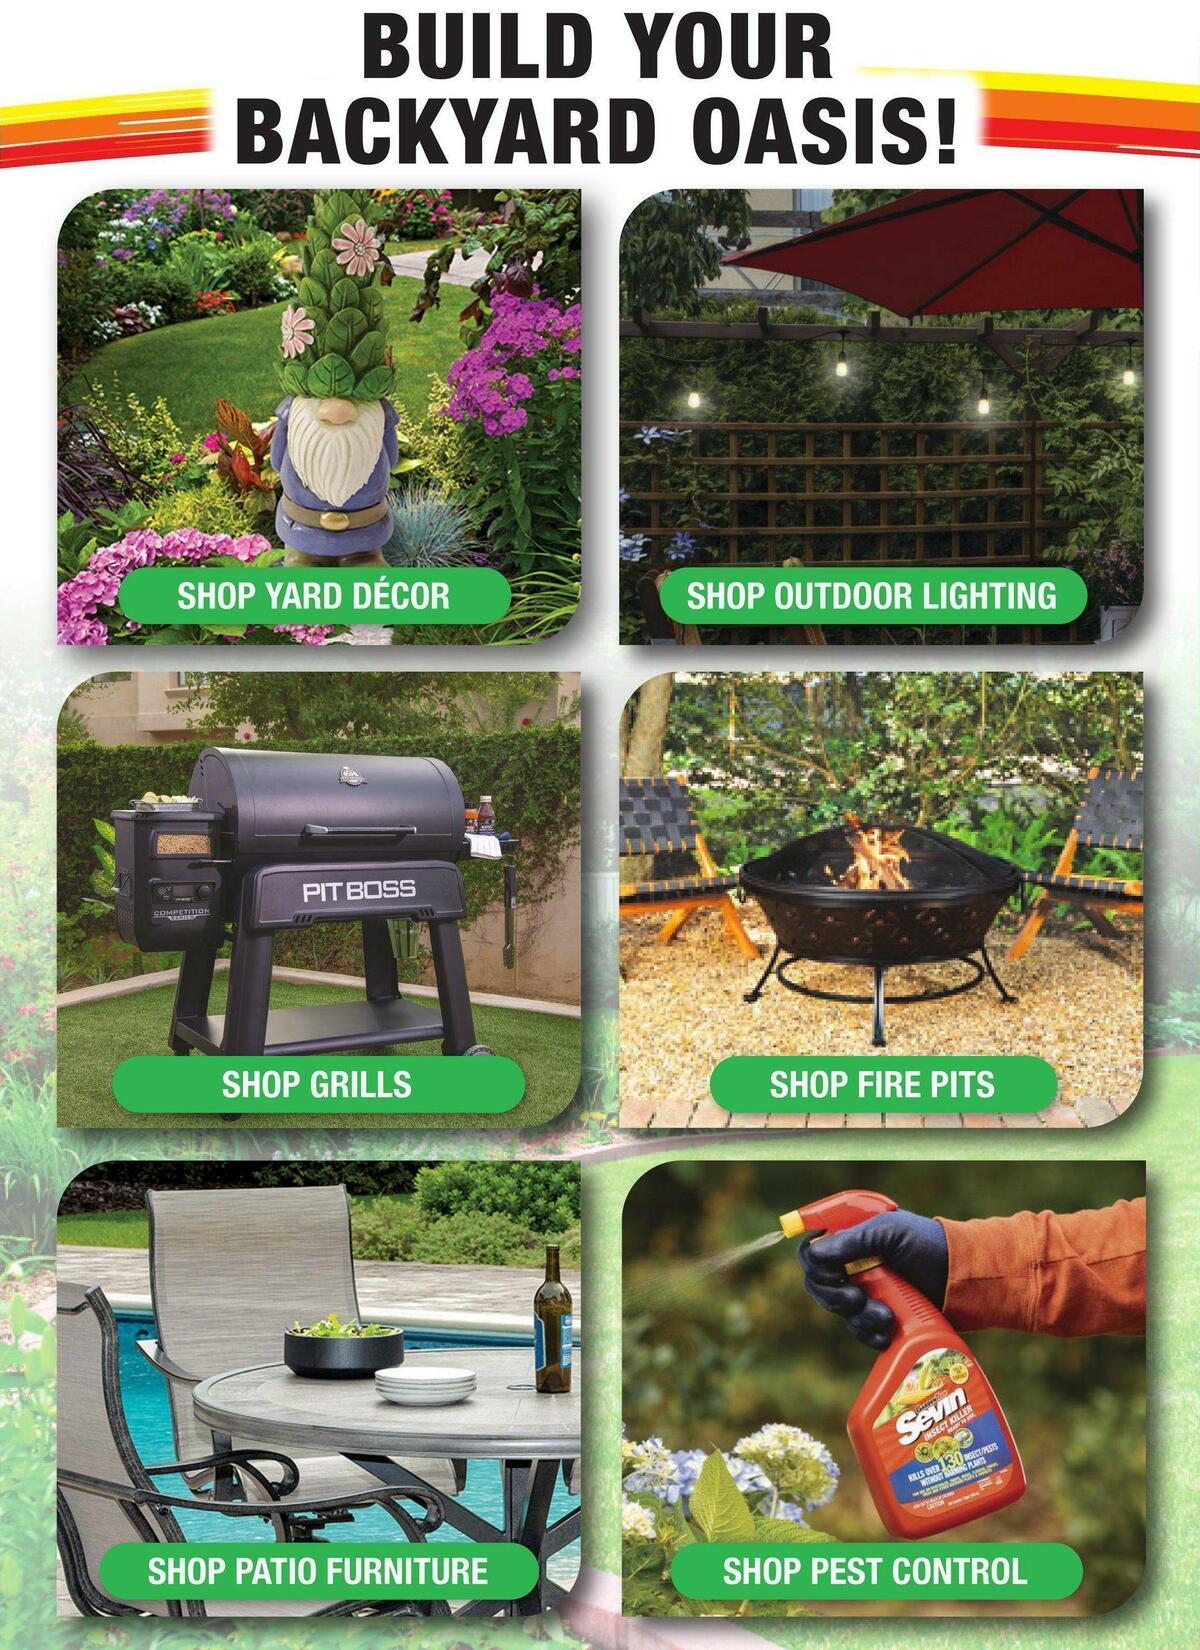 Menards Garden Center Weekly Ad from April 26